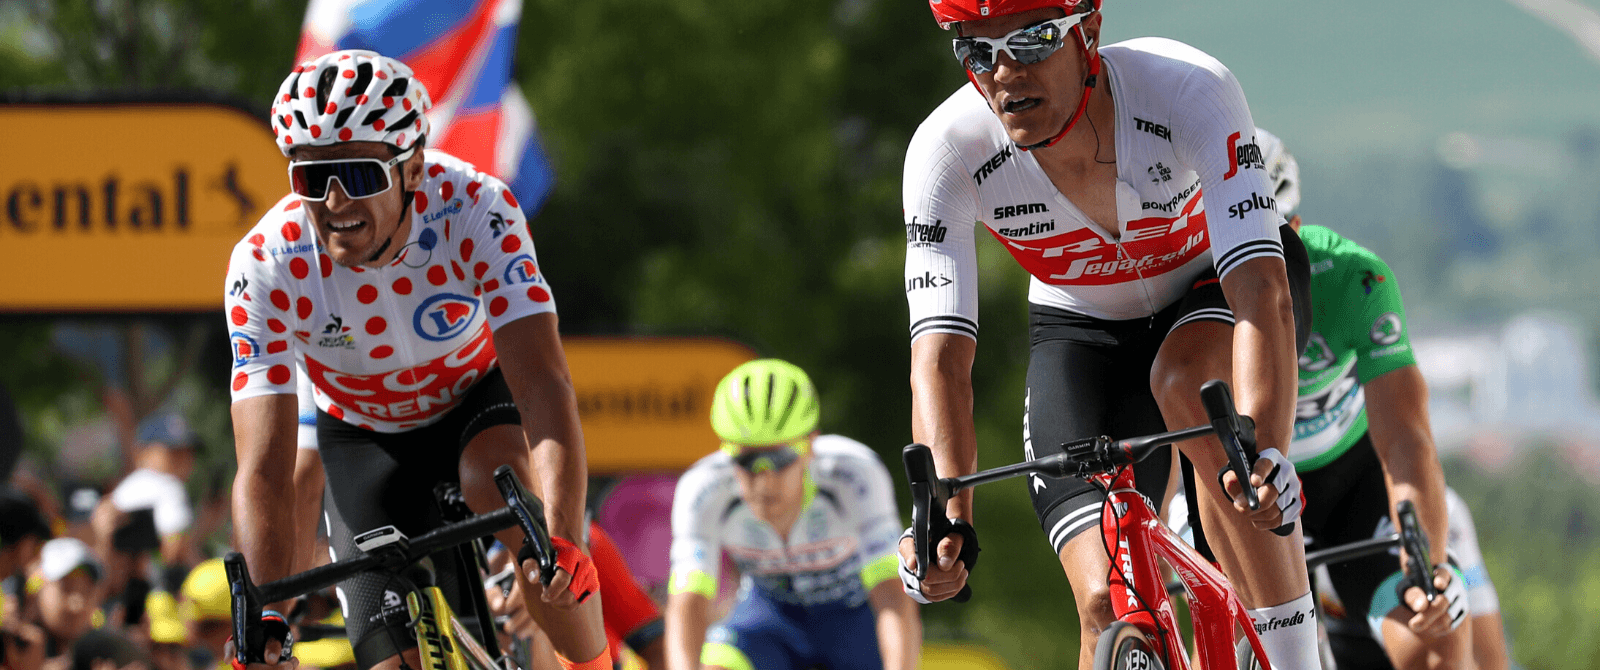 compenseren Brawl wetgeving What do the jerseys mean in the tour de France? | Trek Travel